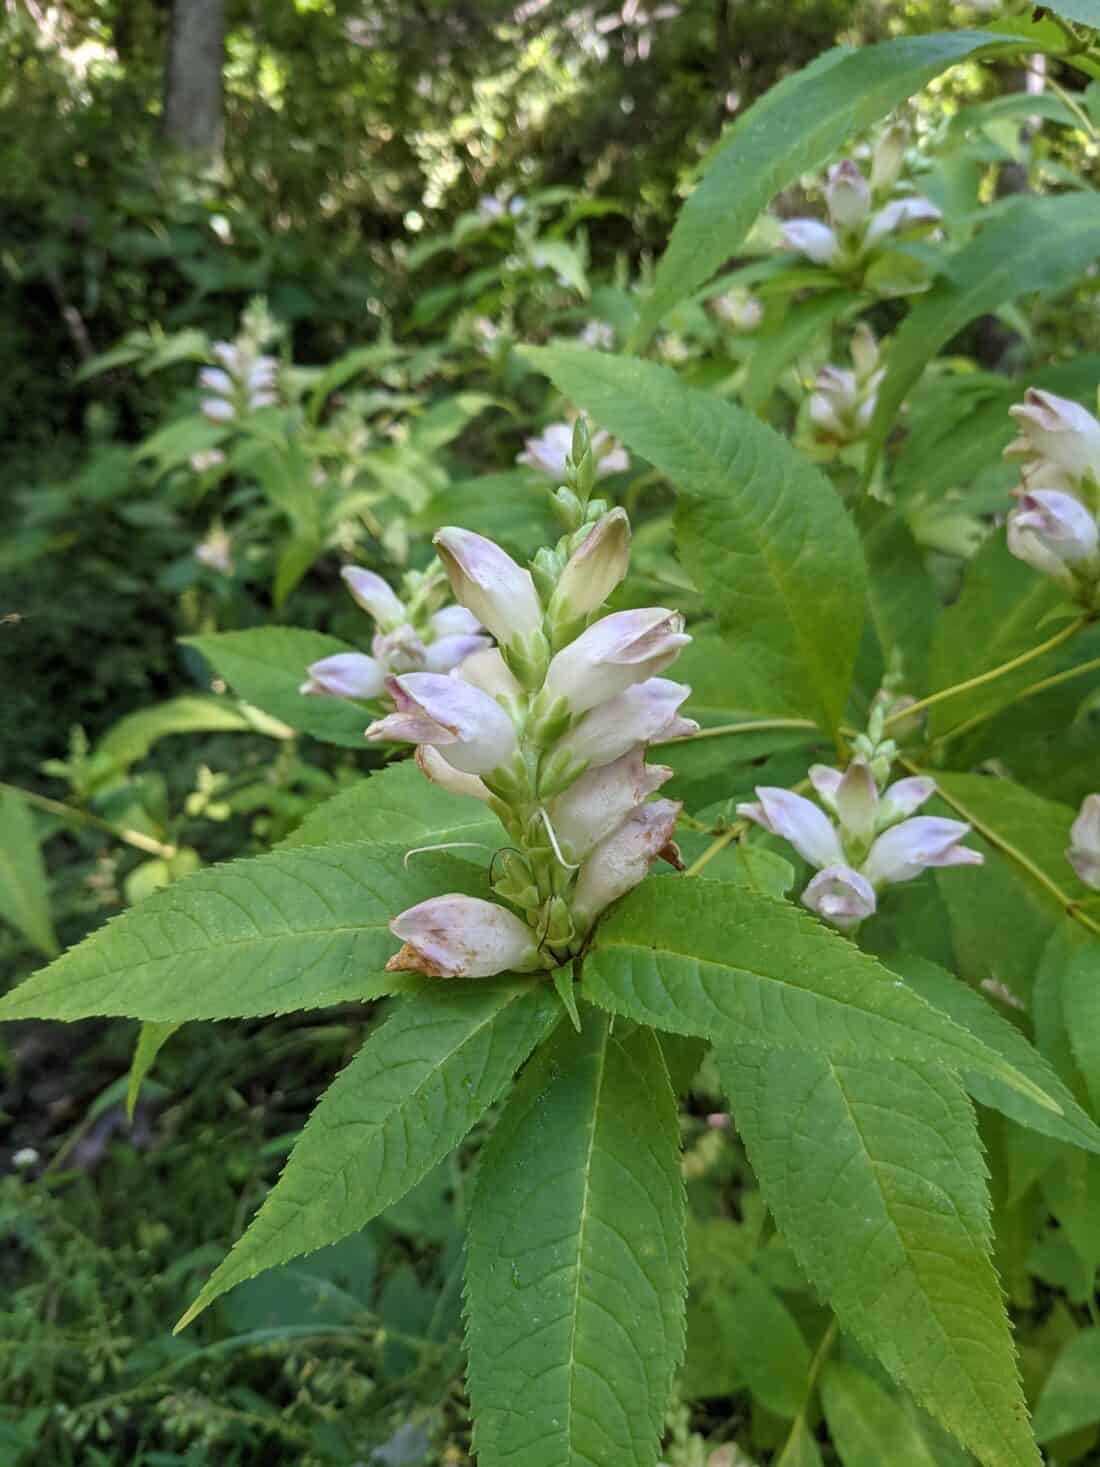 Chelone glabra - White turtlehead is a true New England native plant